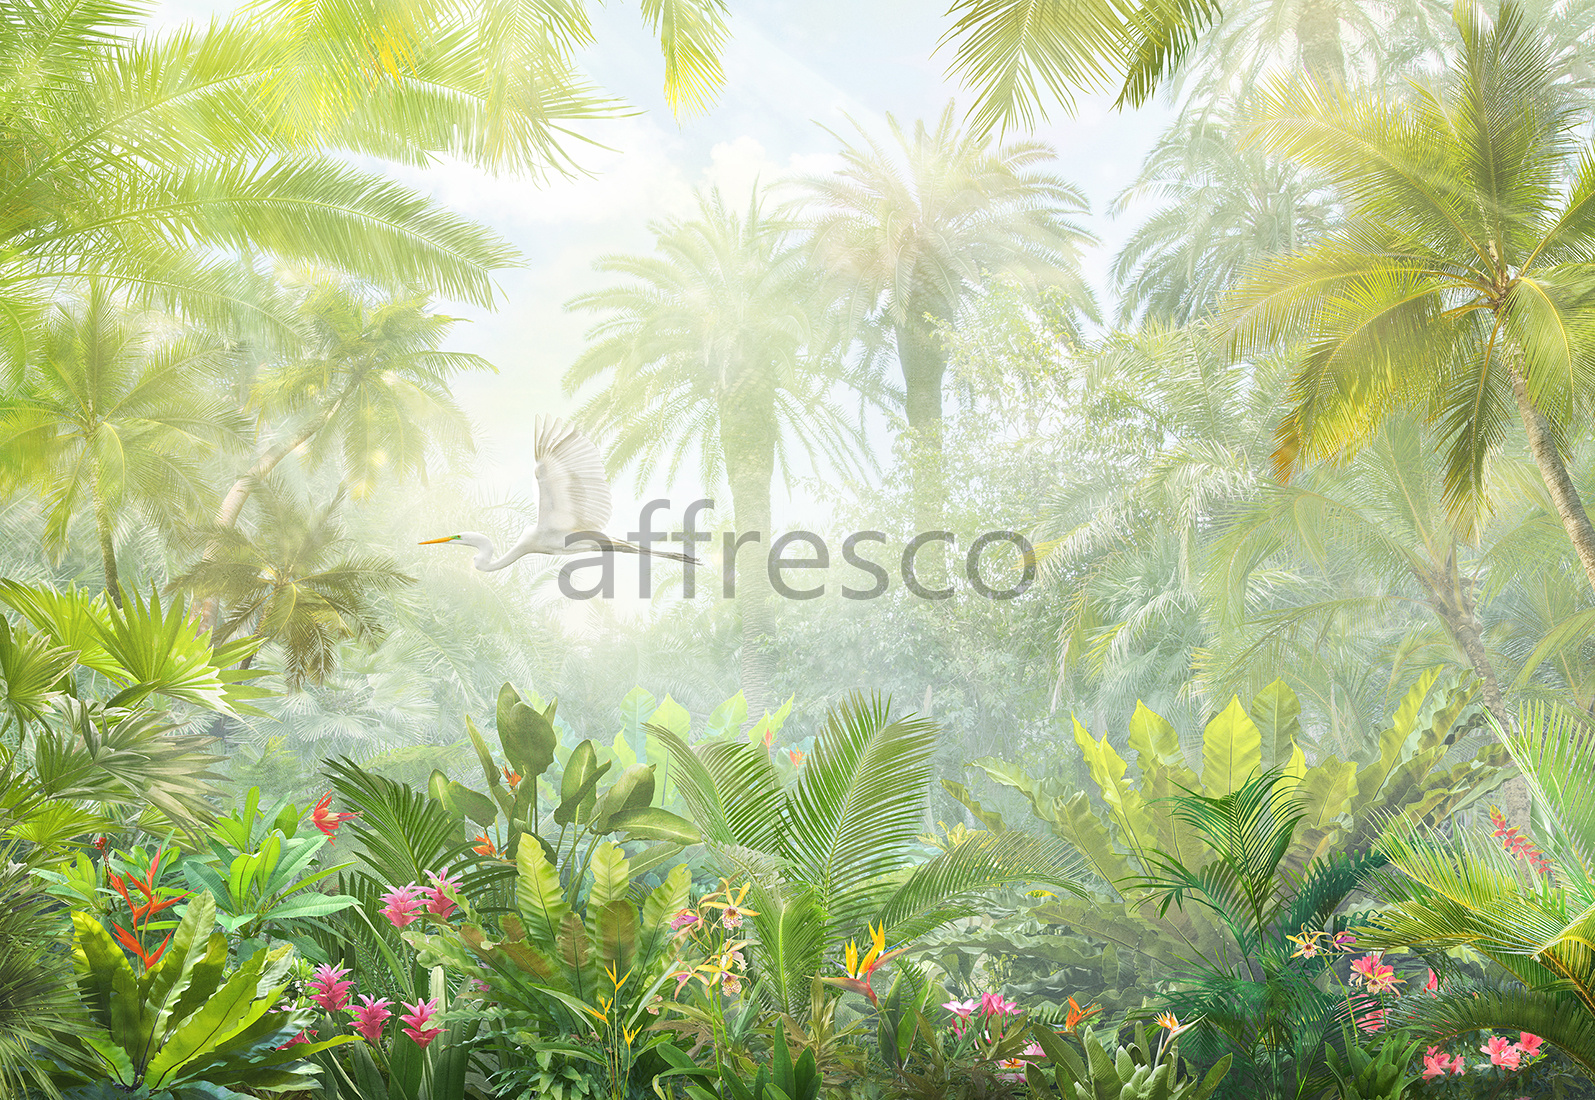 id136561 | The best landscapes |  | Affresco Factory